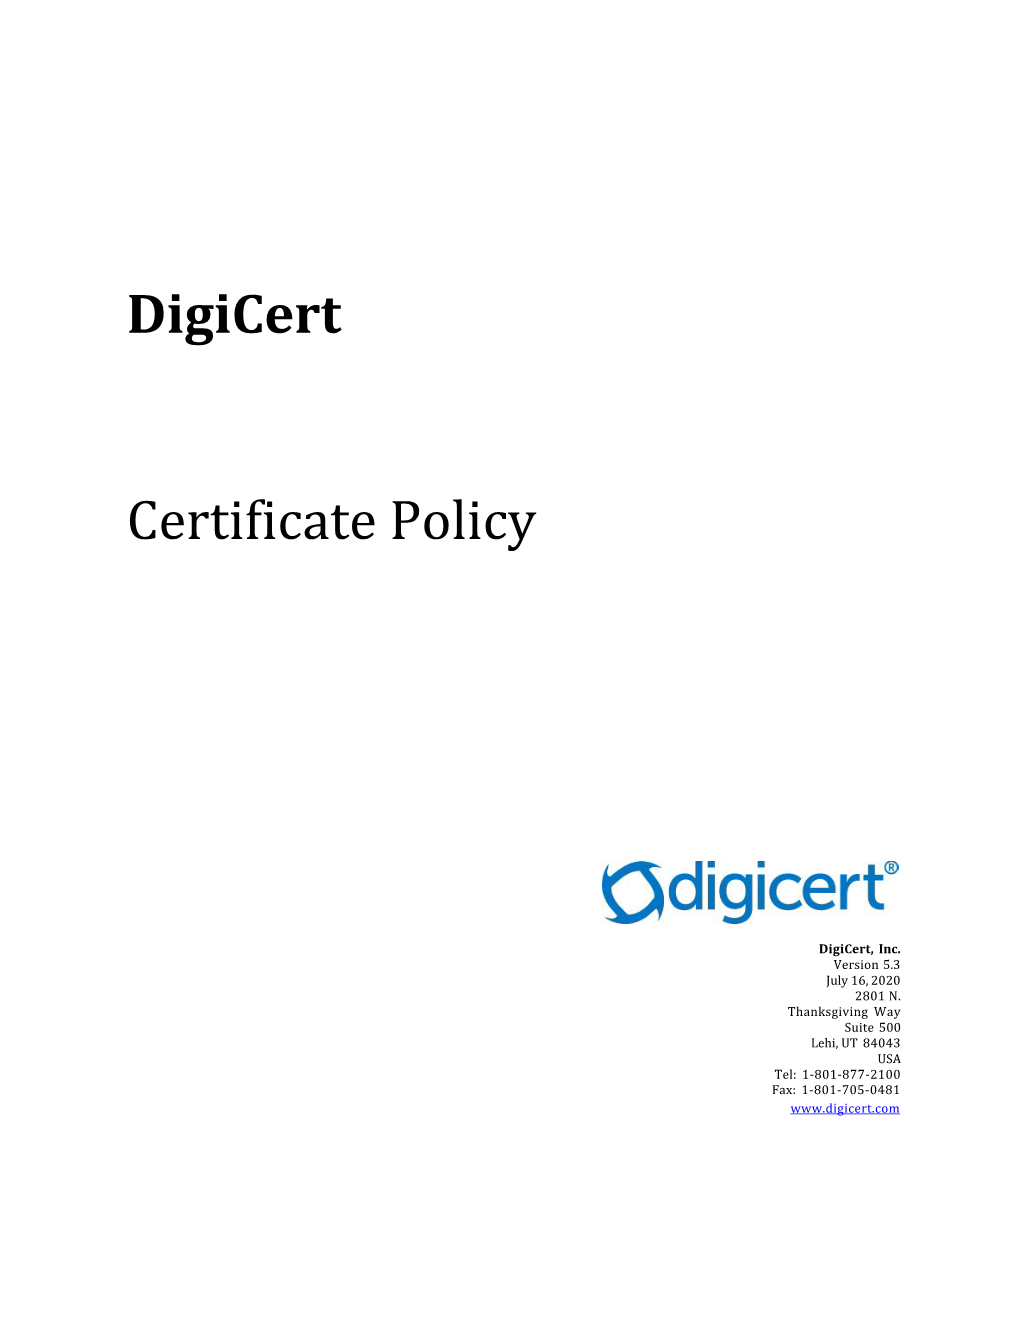 Digicert Certificate Policy (CP)